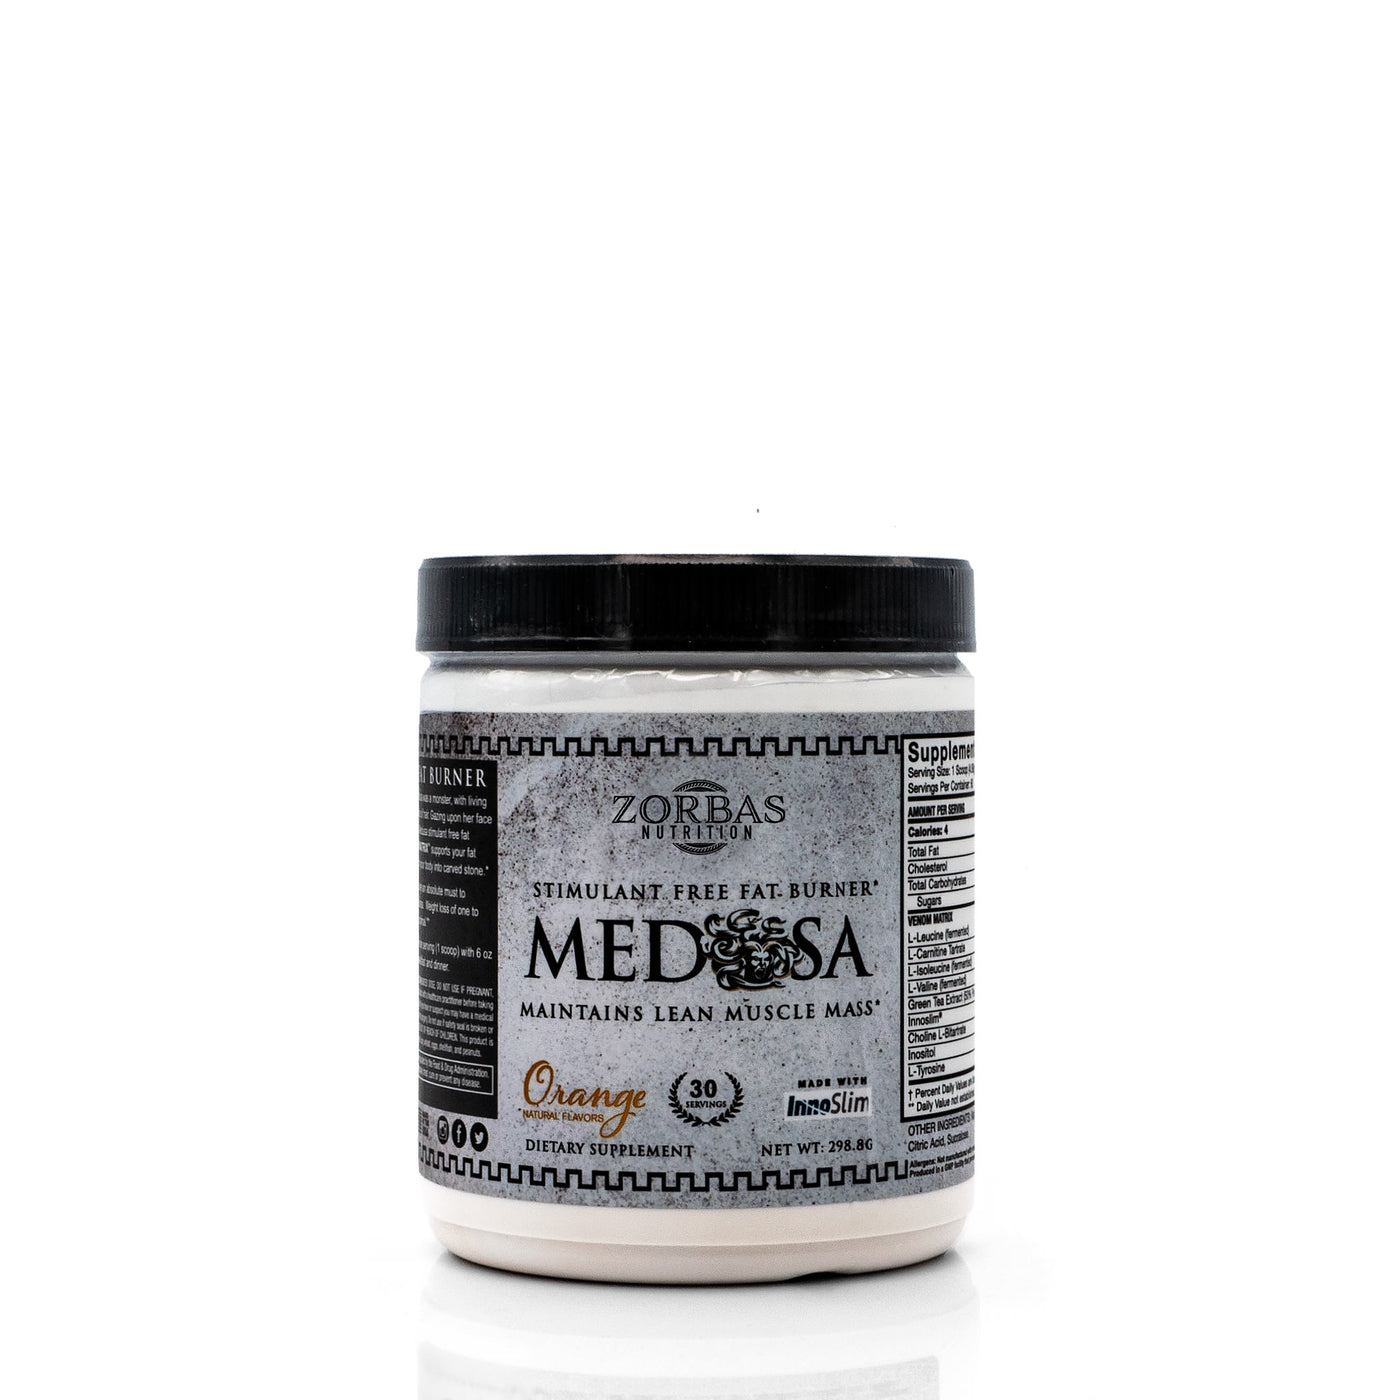 Medusa — Stimulant Free Fat Burner